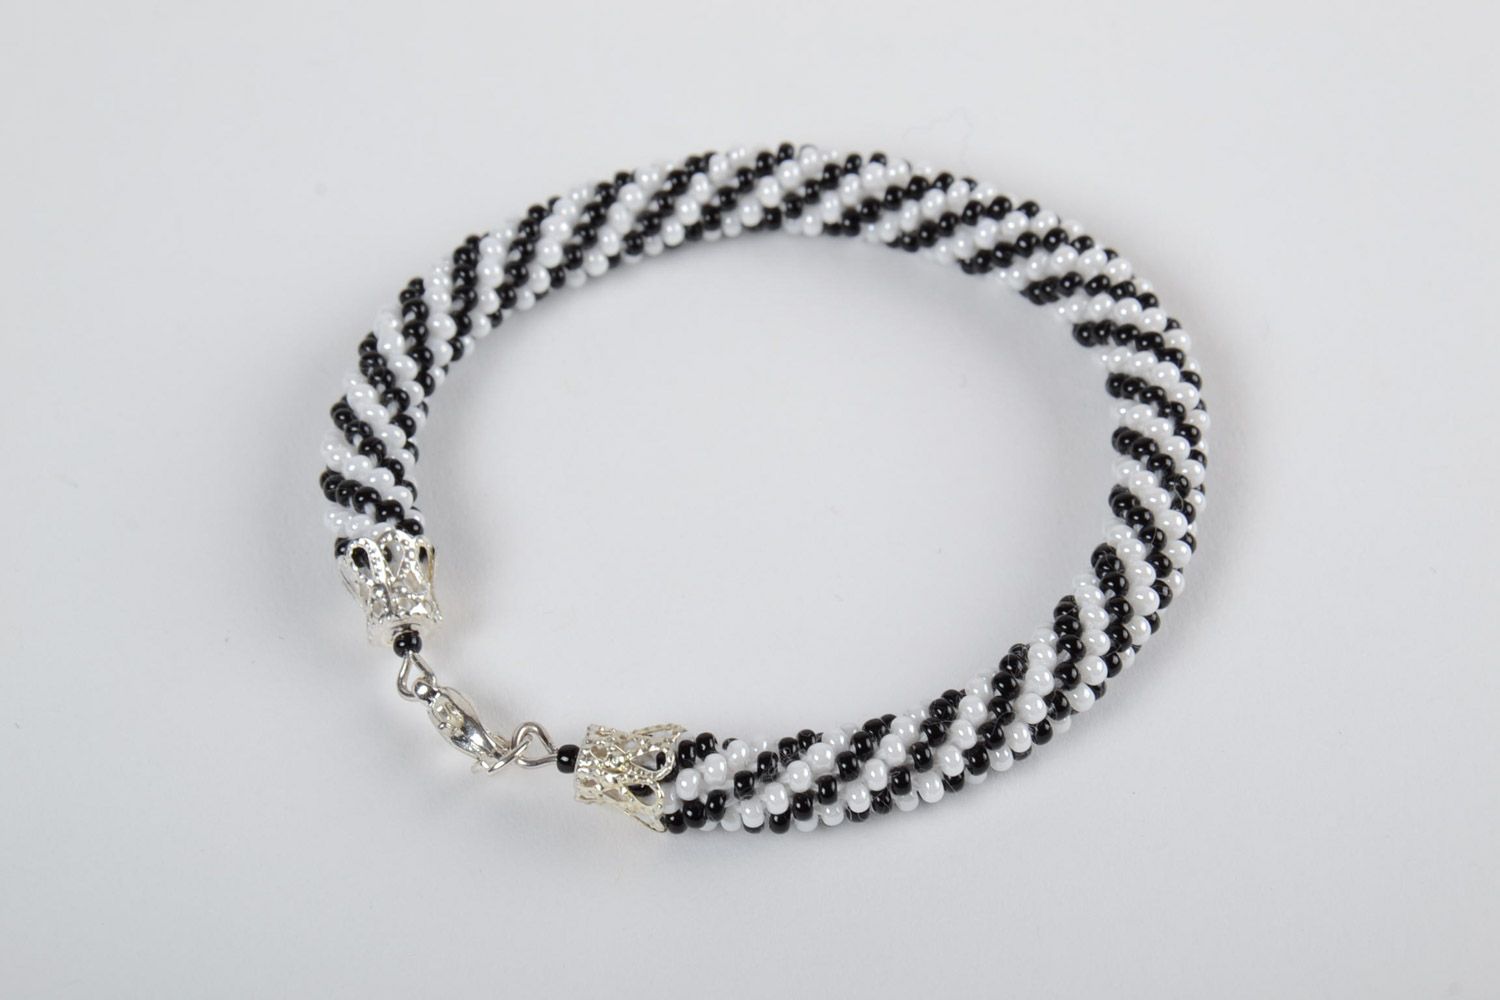 Handmade beautiful wrist bracelet made of Czech beads black and white for women photo 2